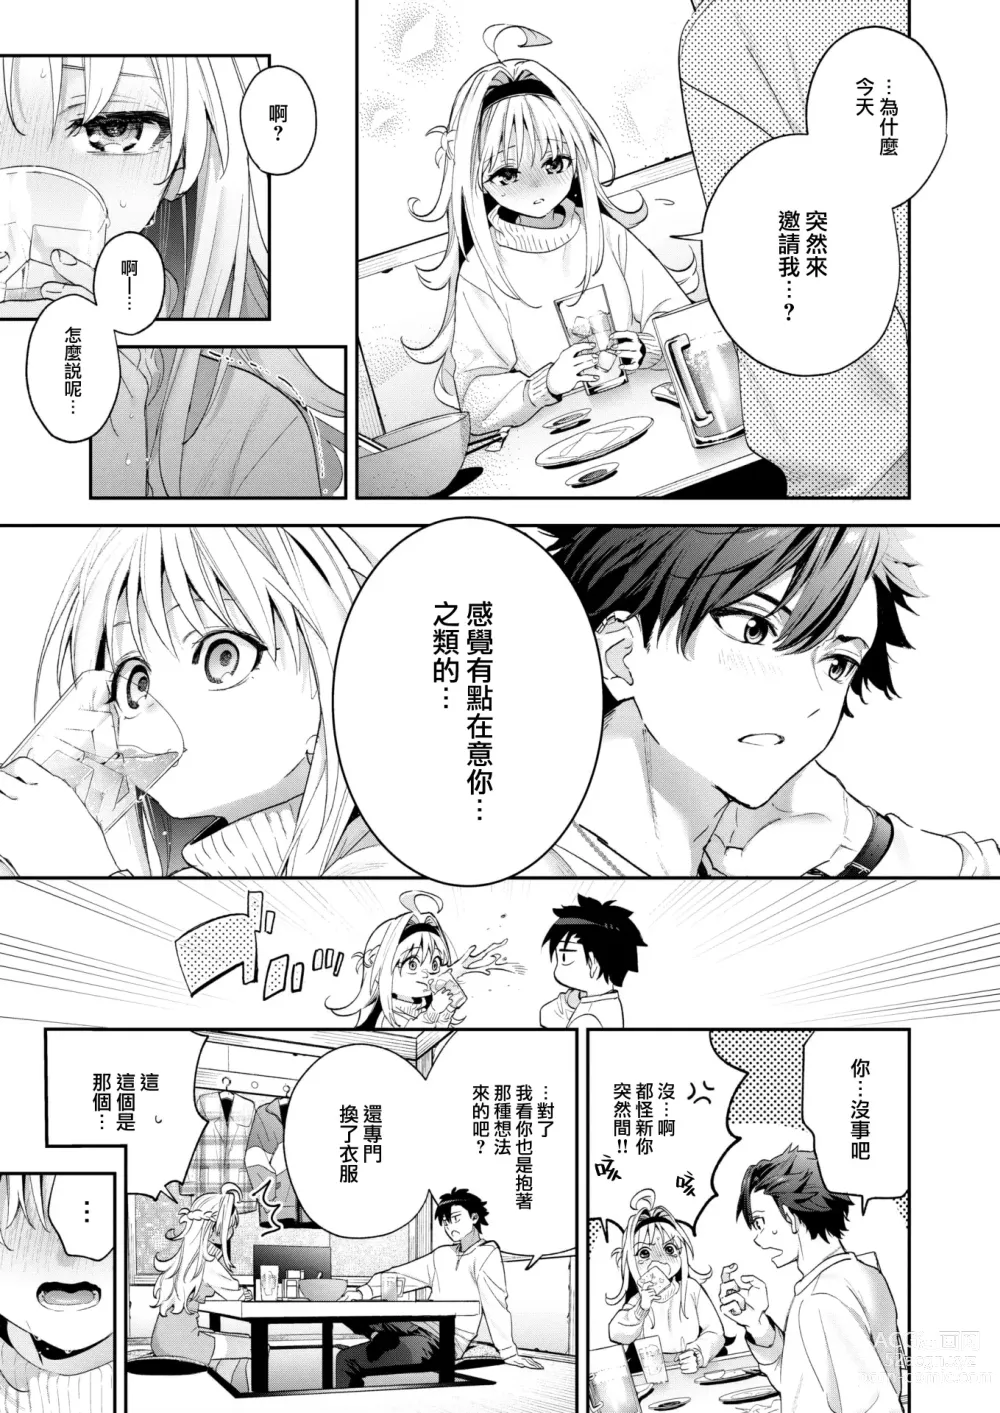 Page 10 of manga melting snow